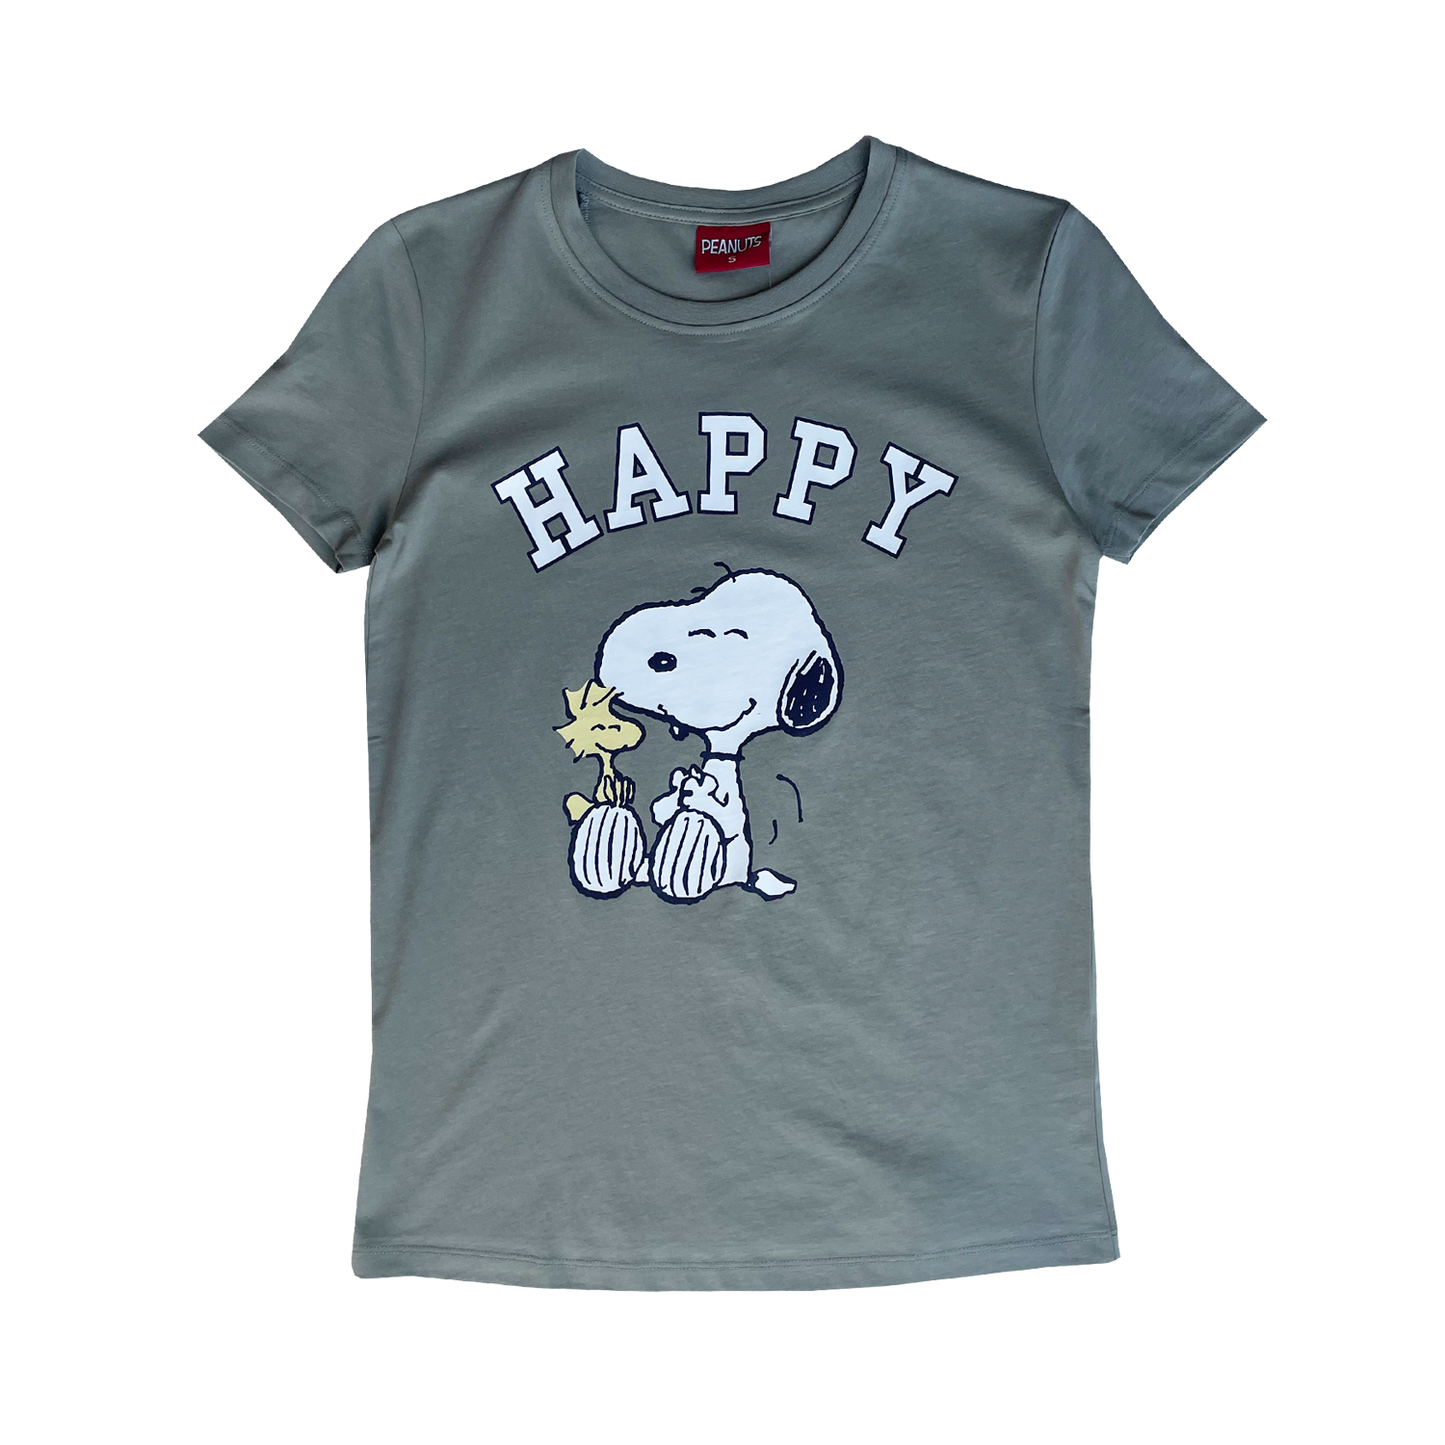 Peanuts - Snoopy Happy T-Shirt